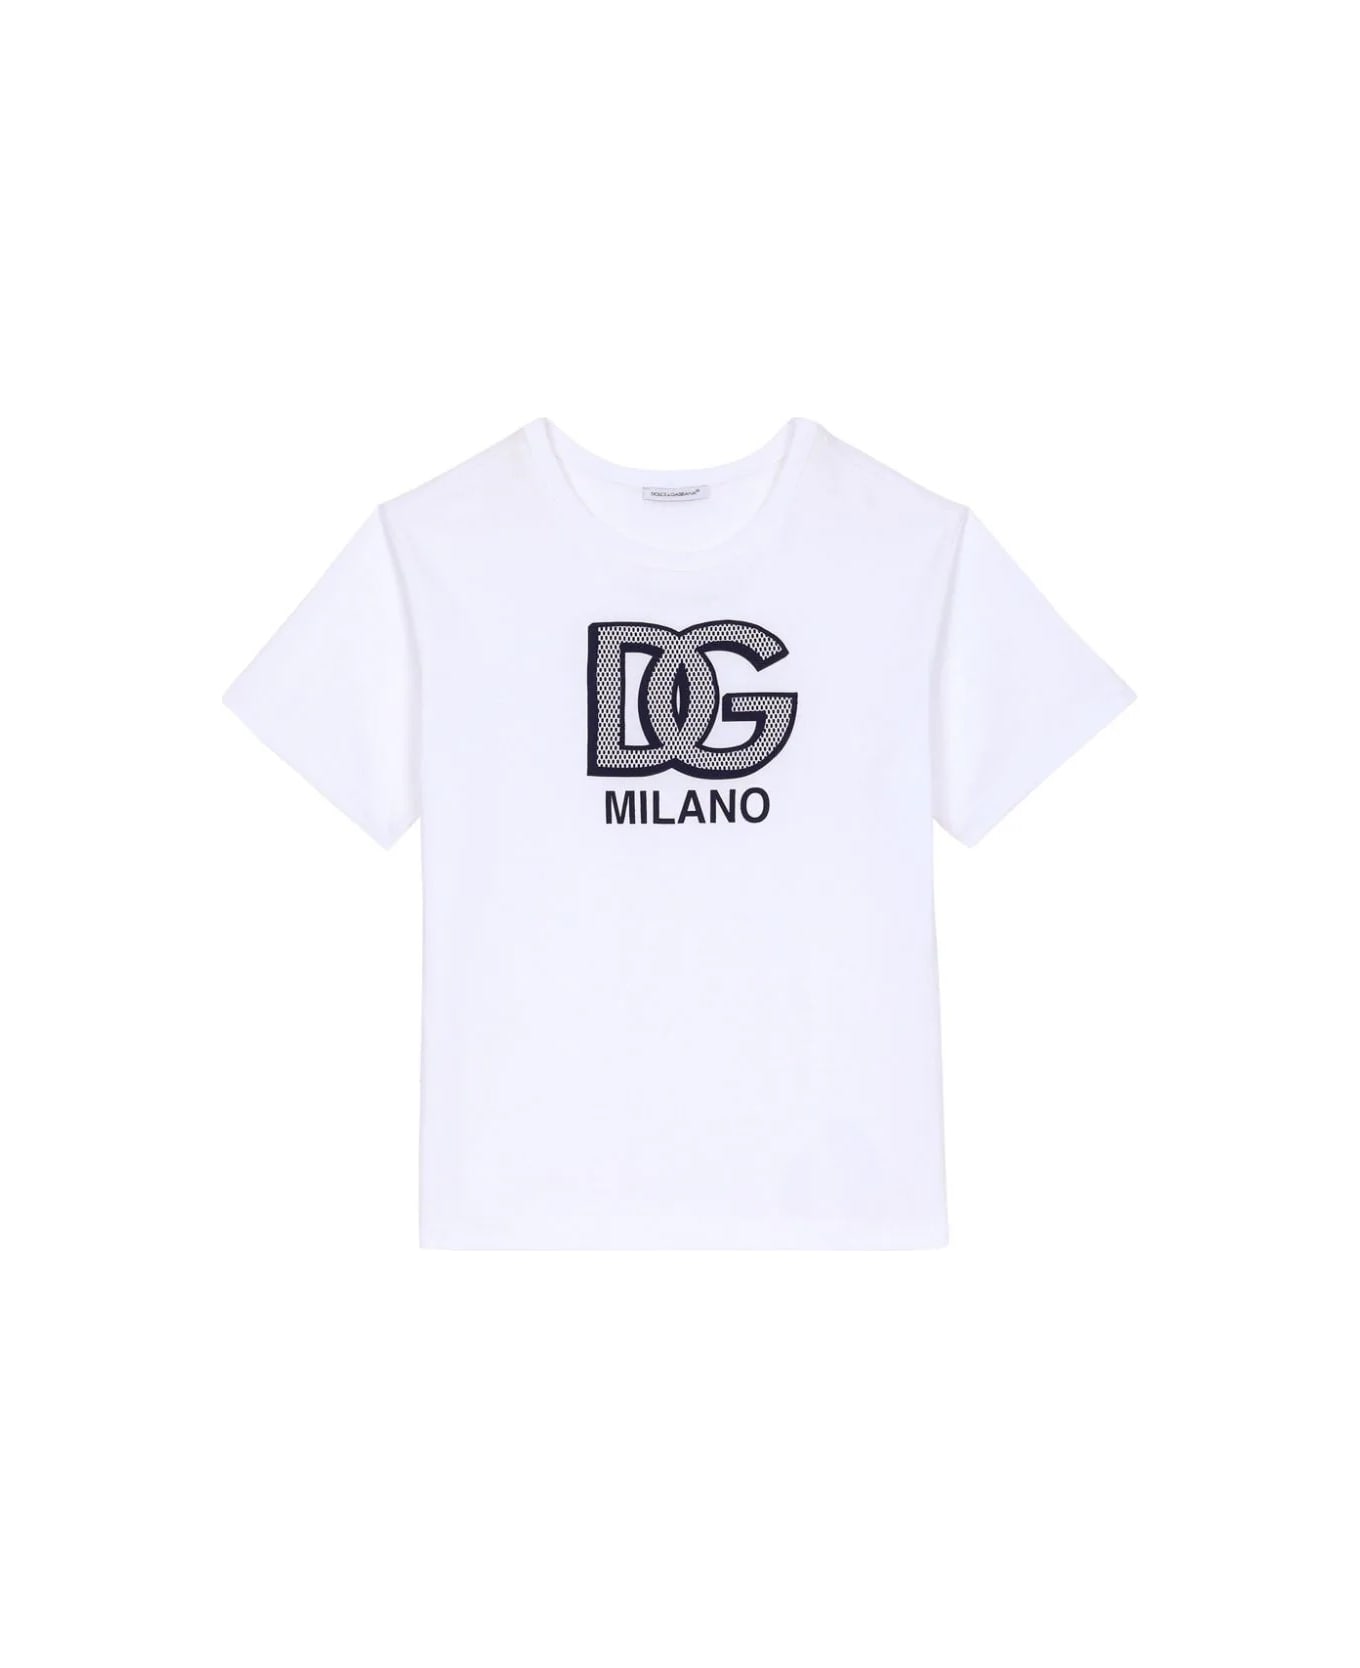 Dolce & Gabbana White T-shirt With Dg Milano Logo Print - Variante